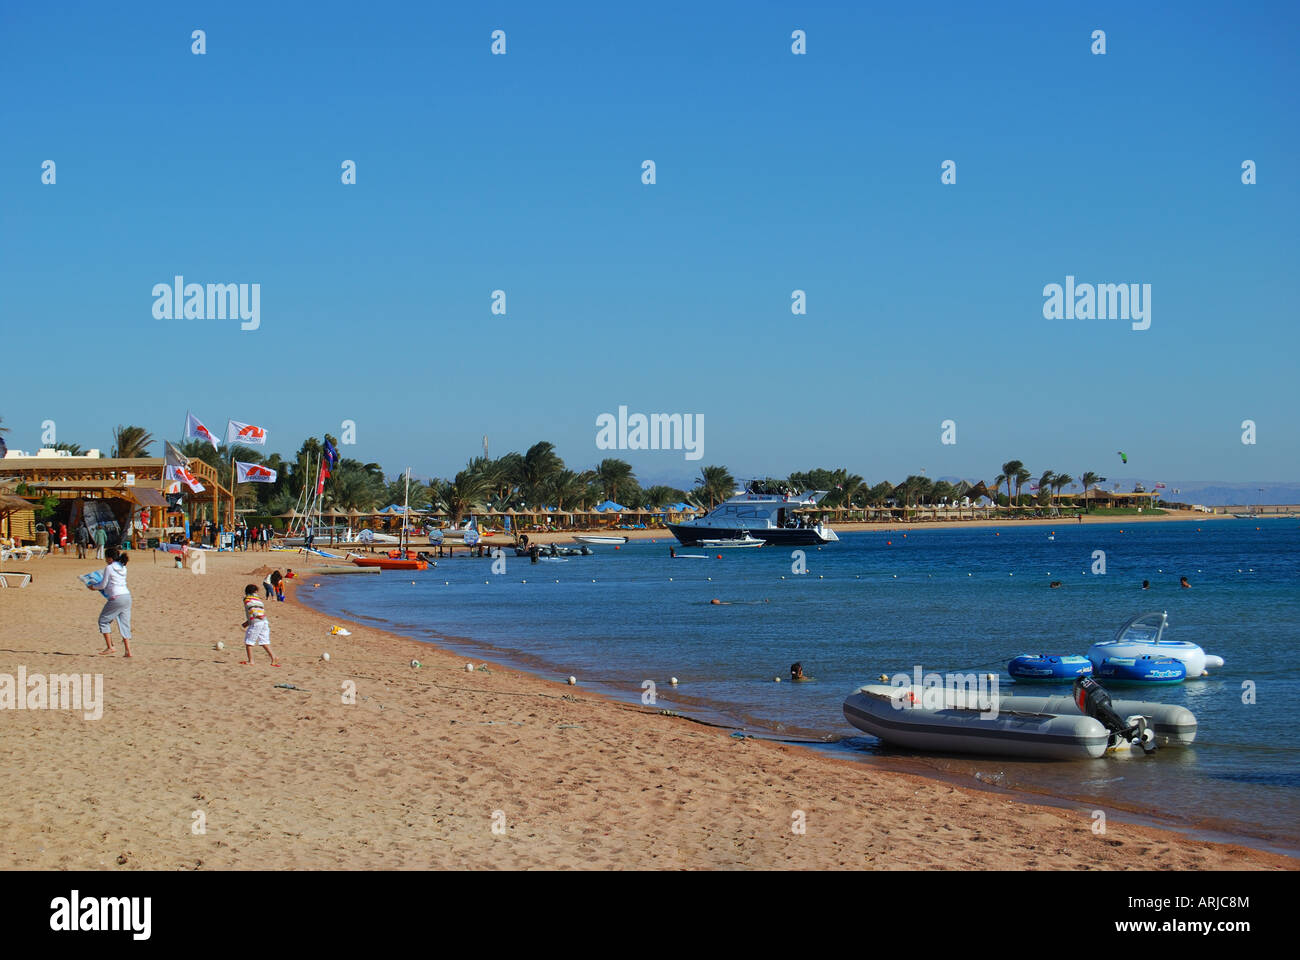 Hilton Resort Hotel beach, Dahab, Sinai Peninsula, Republic of Egypt Stock Photo